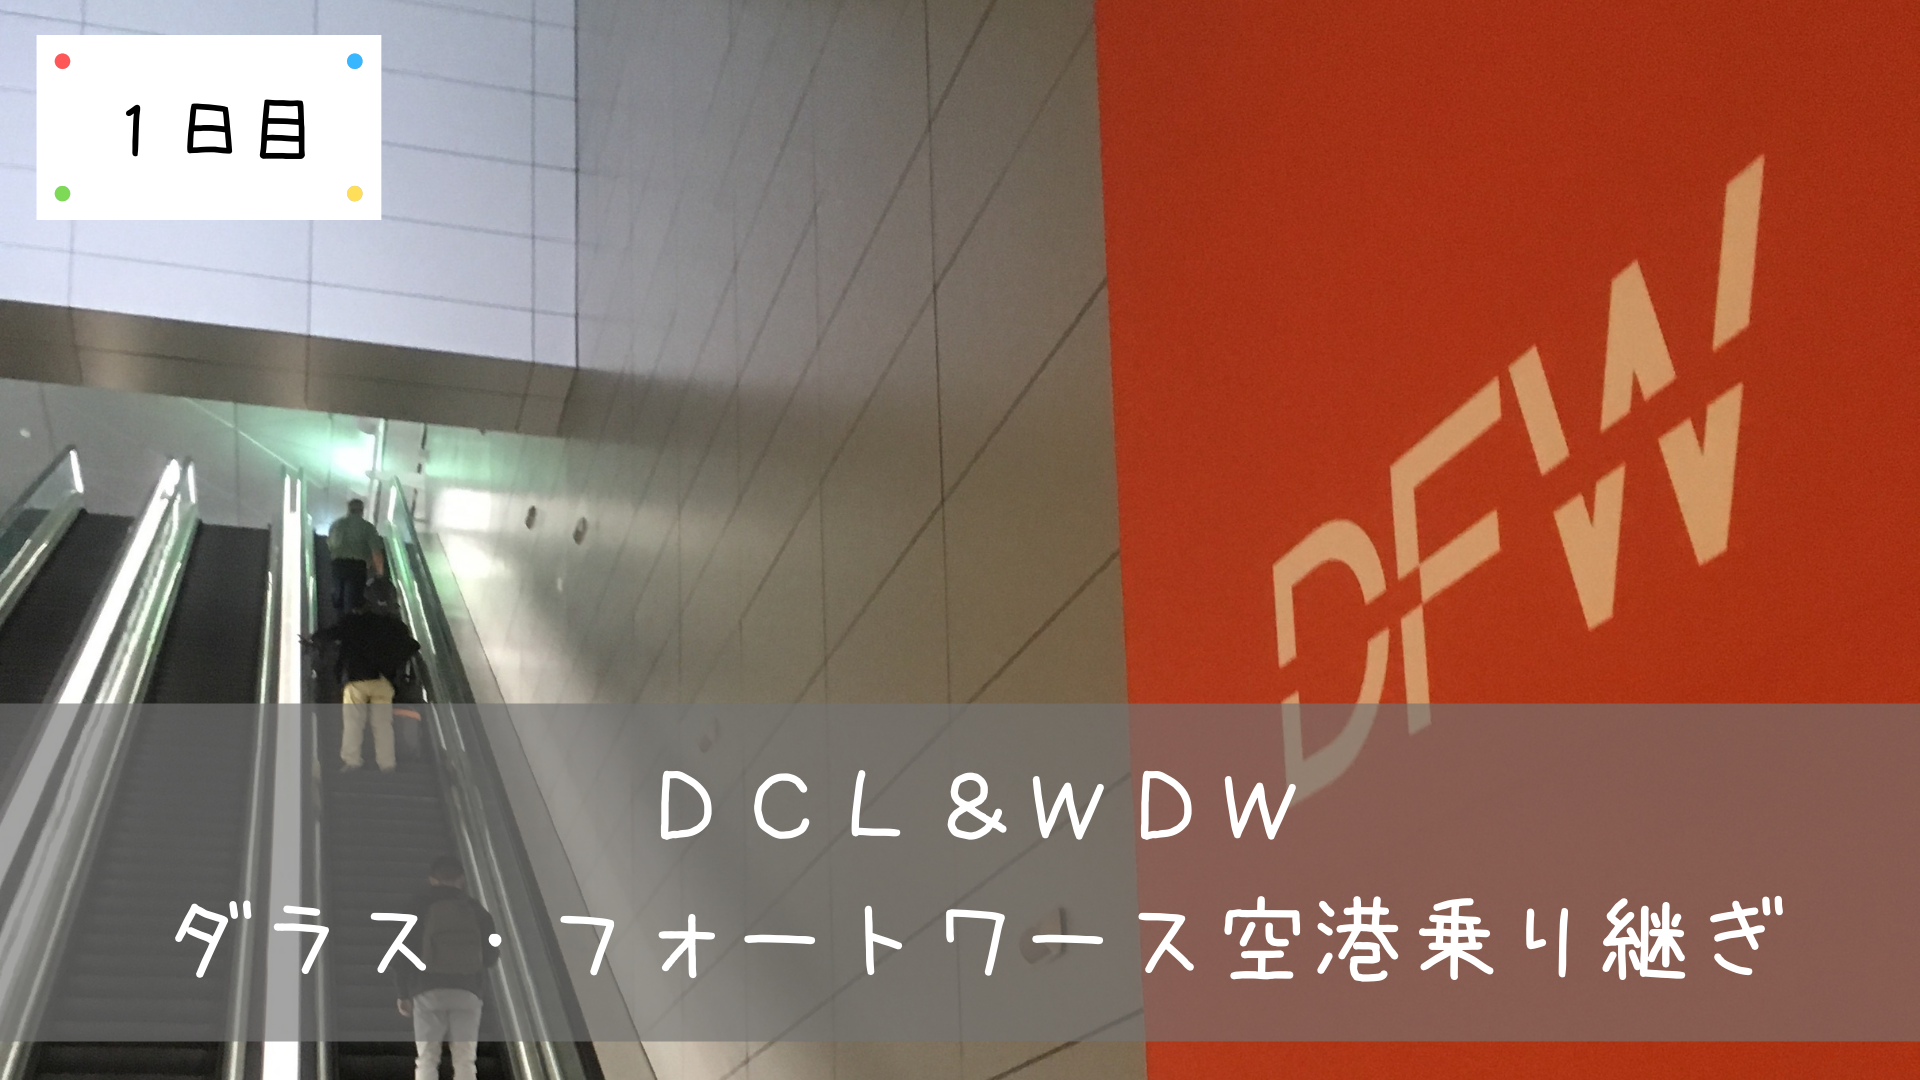 Dcl Wdw ダラス フォートワース空港での乗り継ぎ方法 共働きくま夫婦のブログ